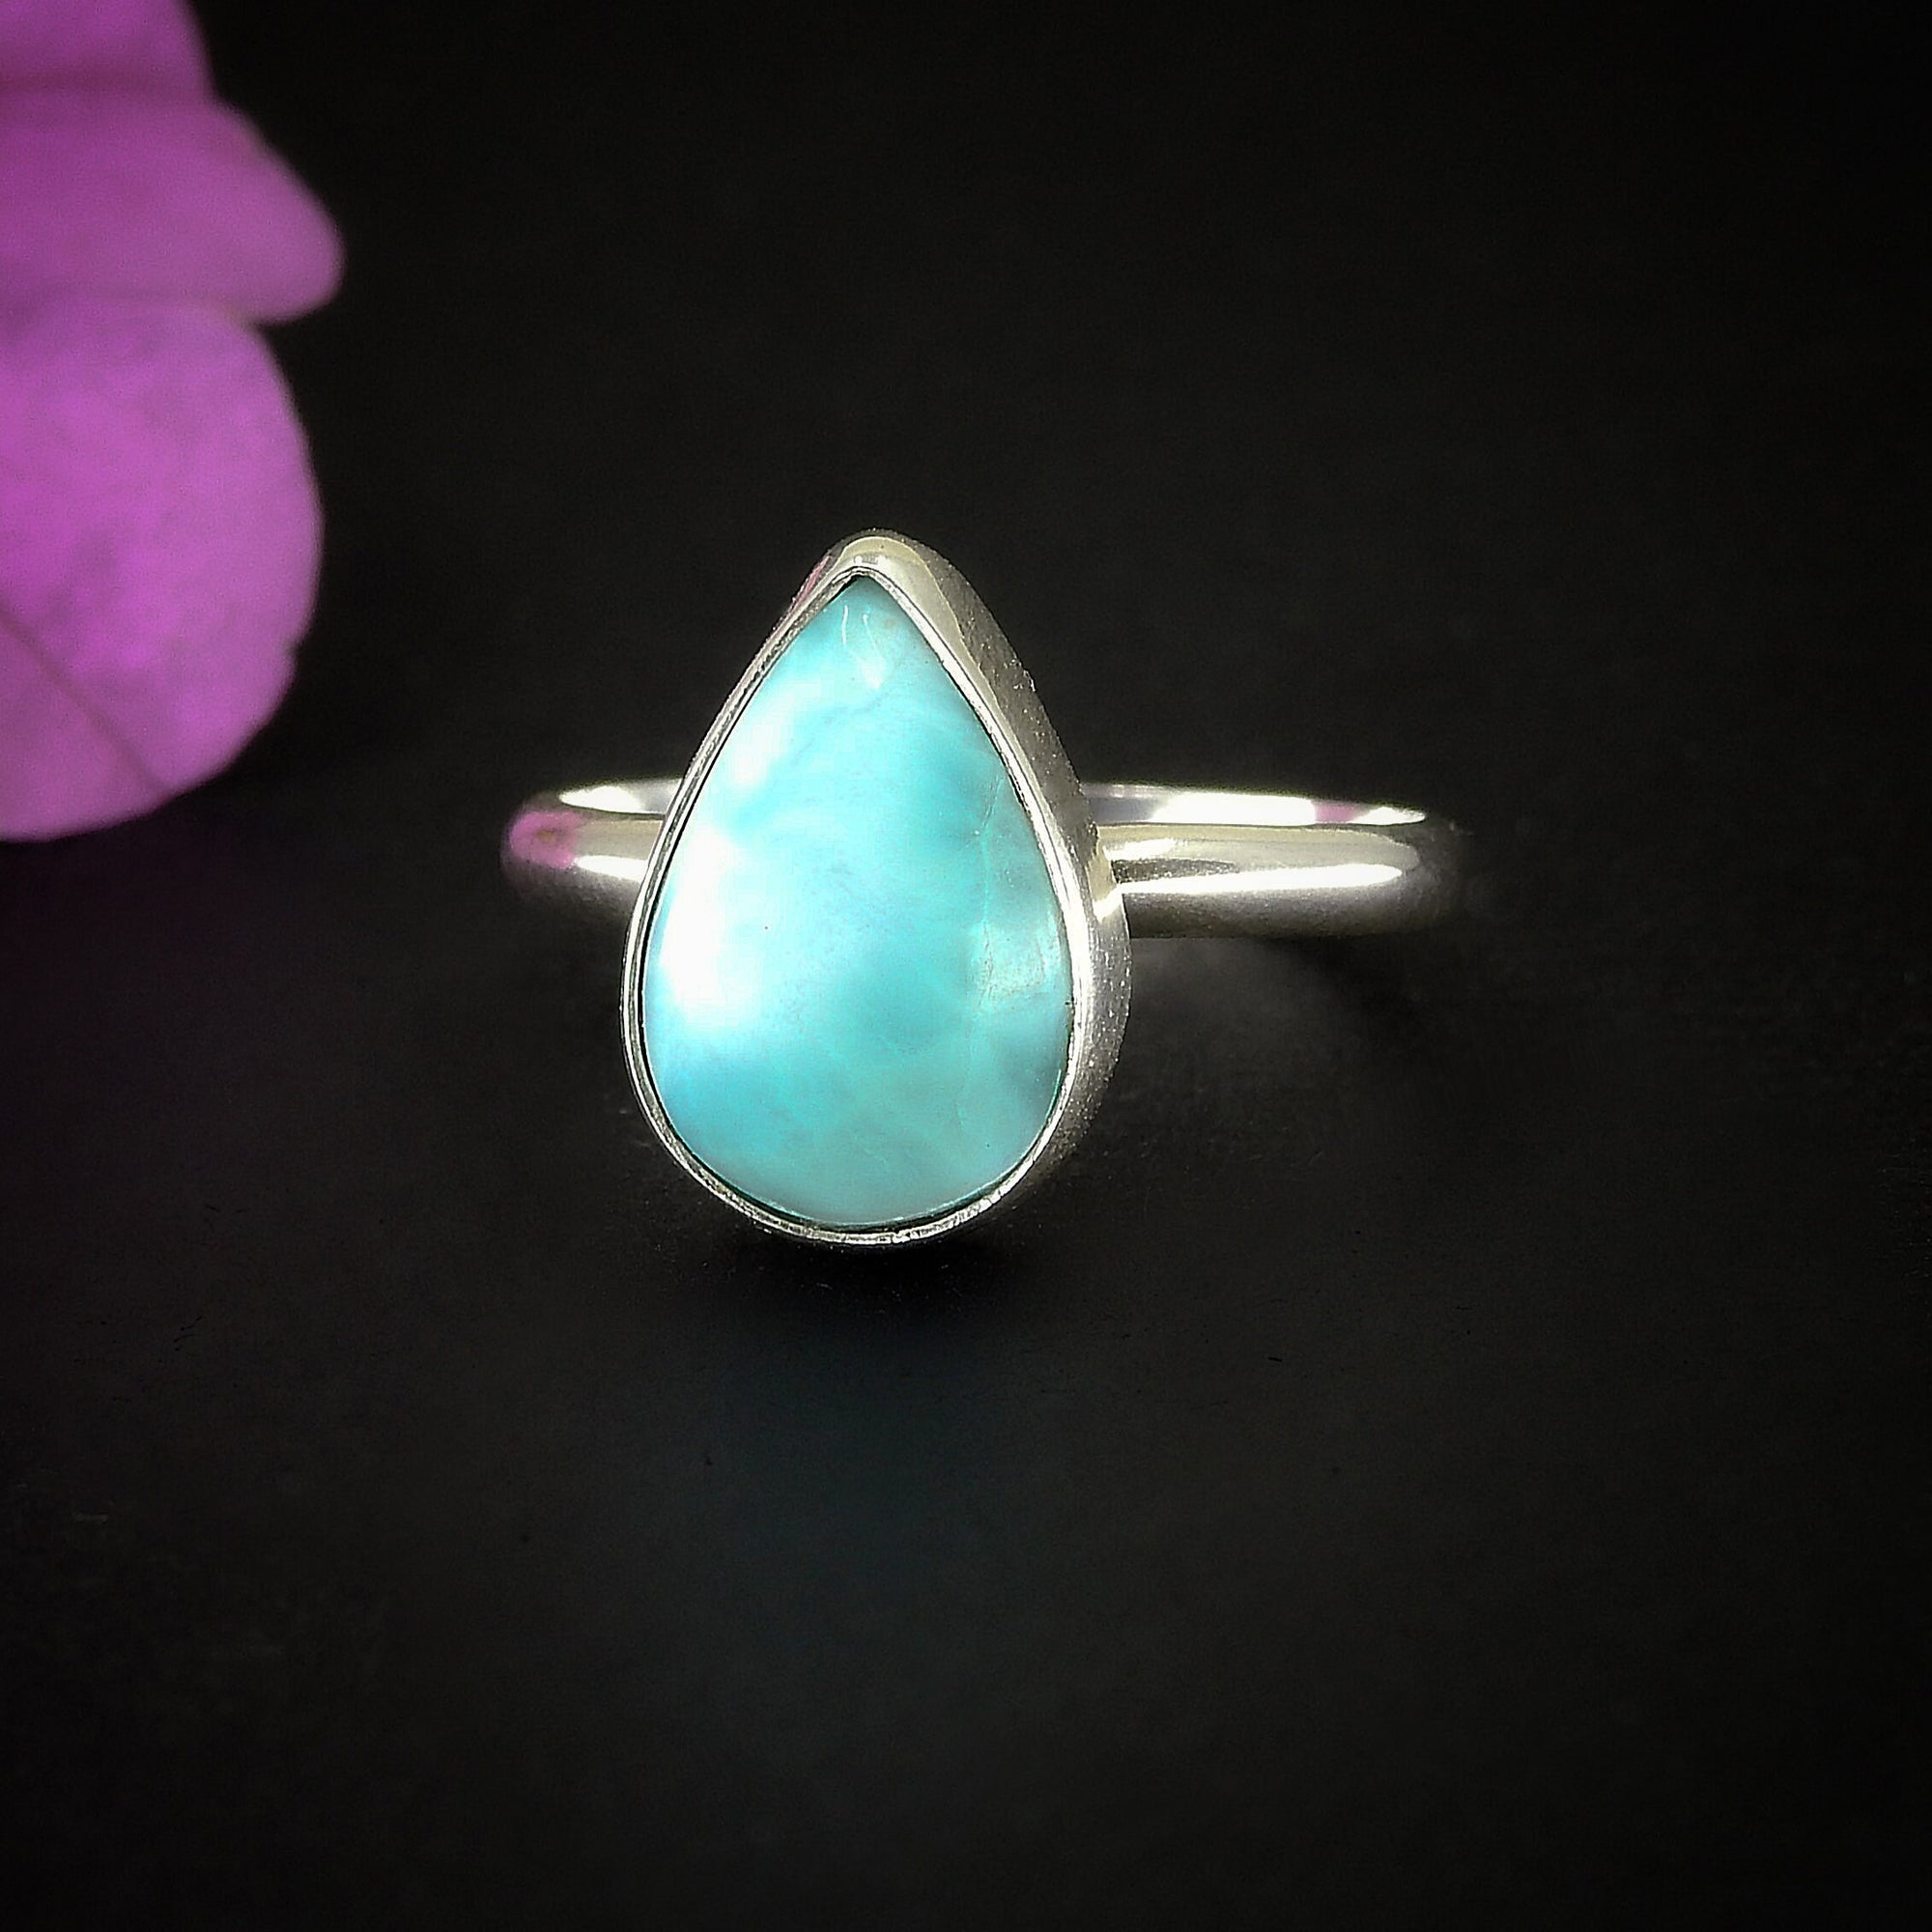 Larimar Ring - Size 7 1/2 - Sterling Silver - Sky Blue Larimar Jewelry - Teardrop Larimar Jewellery - High Grade Larimar Statement Ring